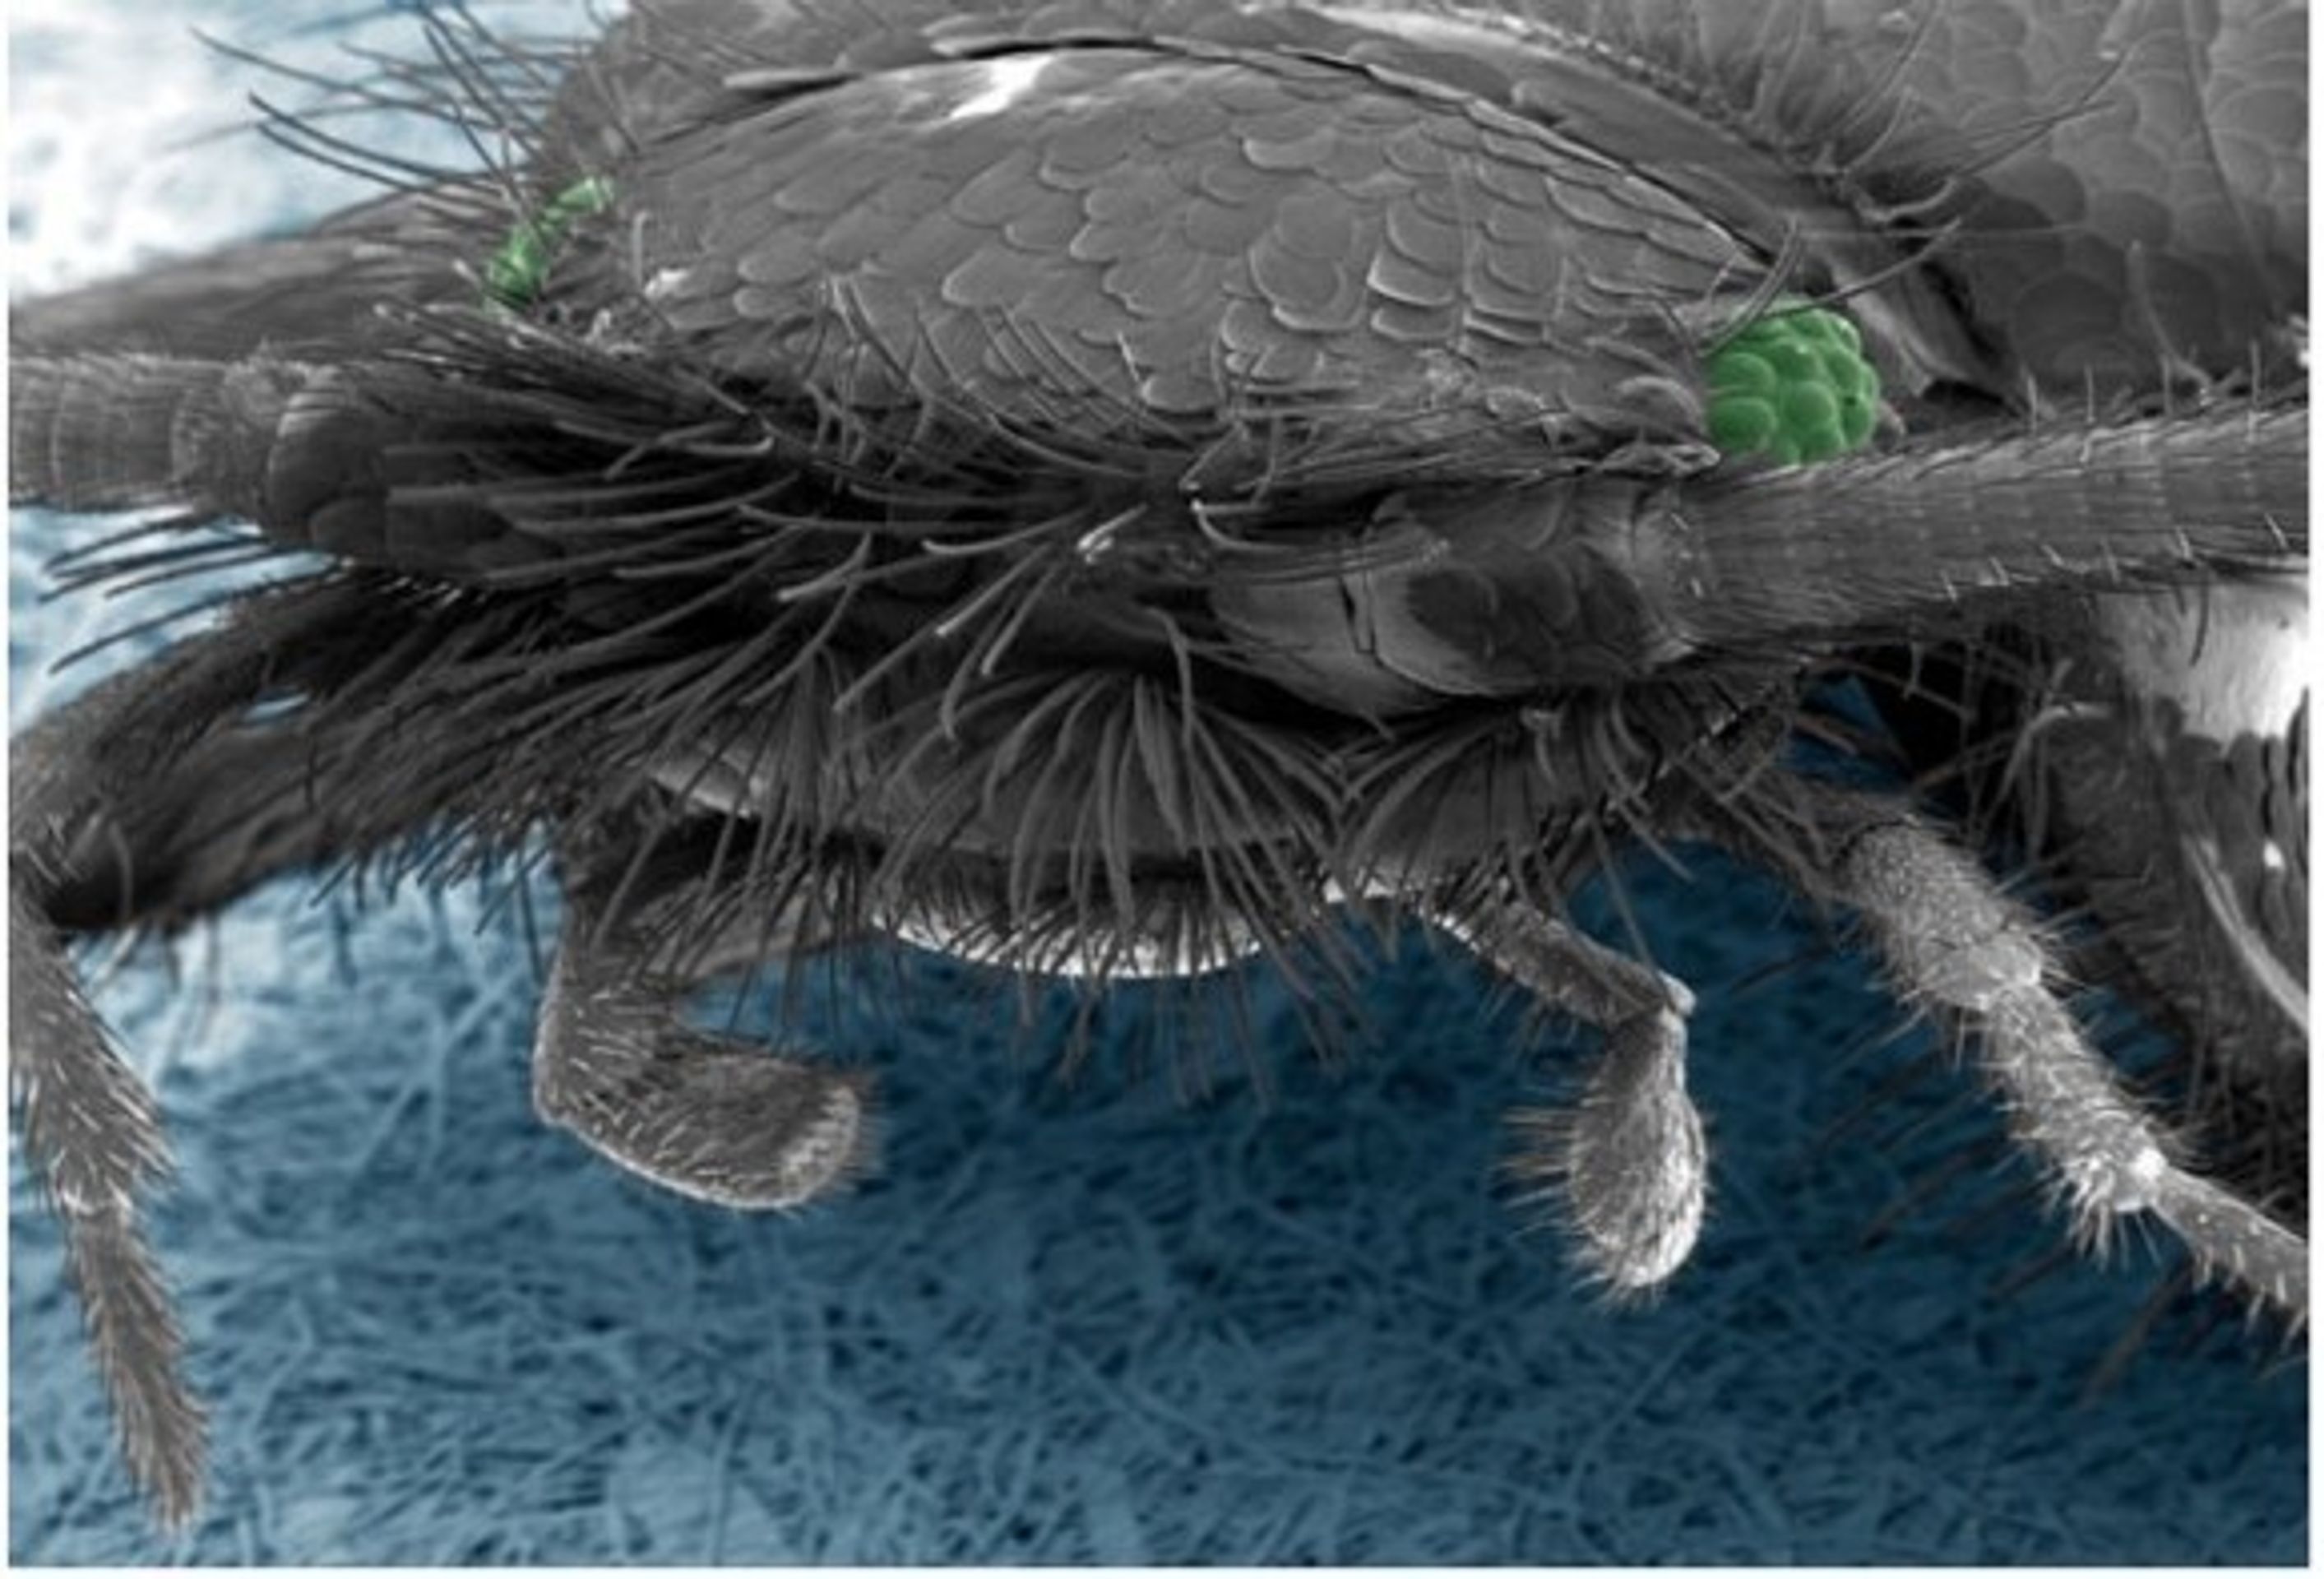 Hmyz pod elektronovým mikroskopem - 11 - GALERIE: Hmyz pod elektronovým mikroskopem (11/20)